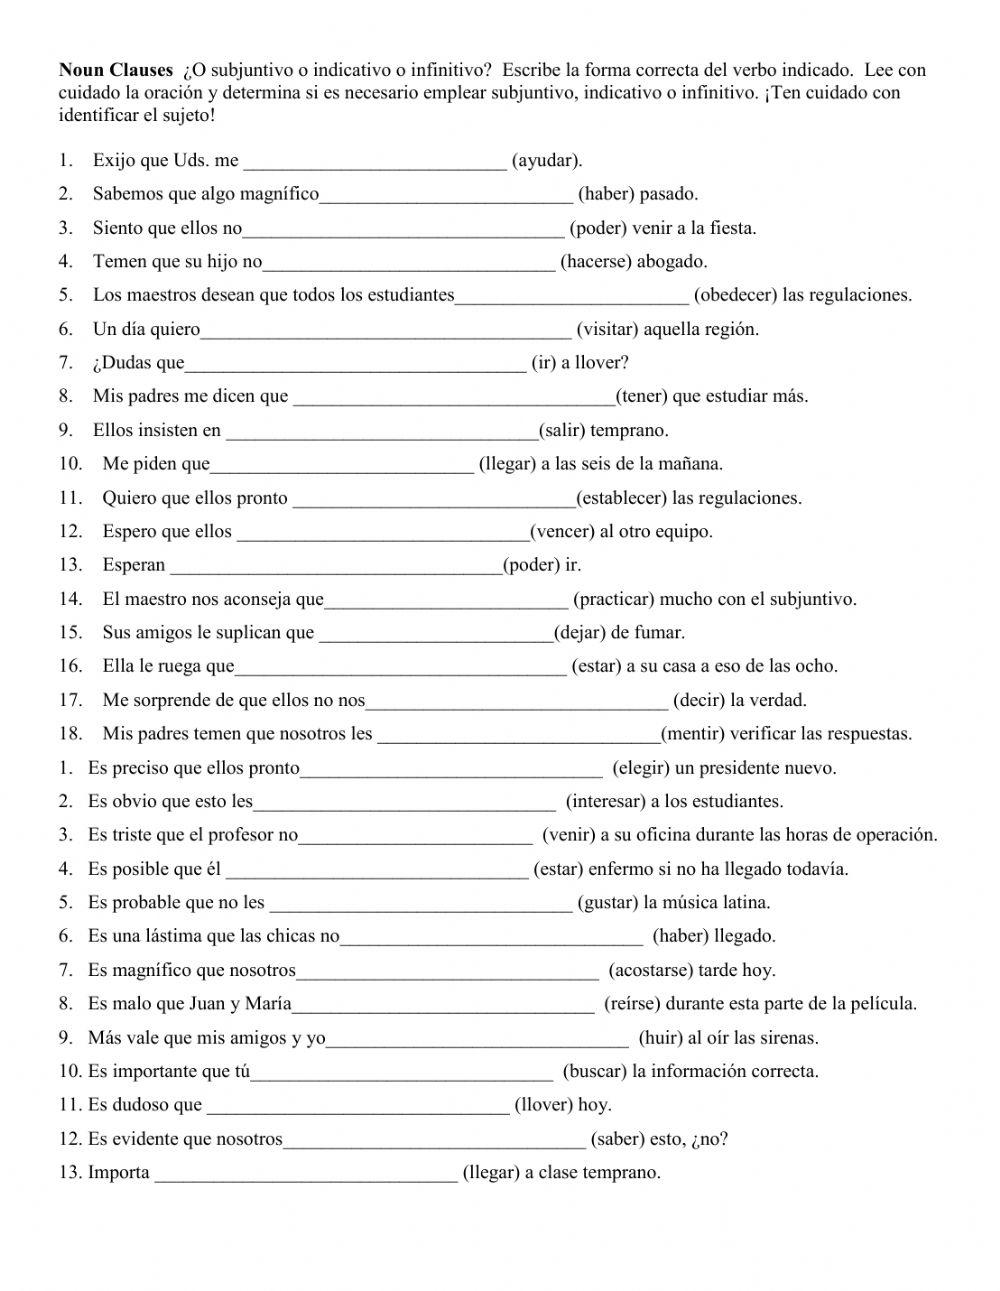 202 Subjunctive in Noun Clauses